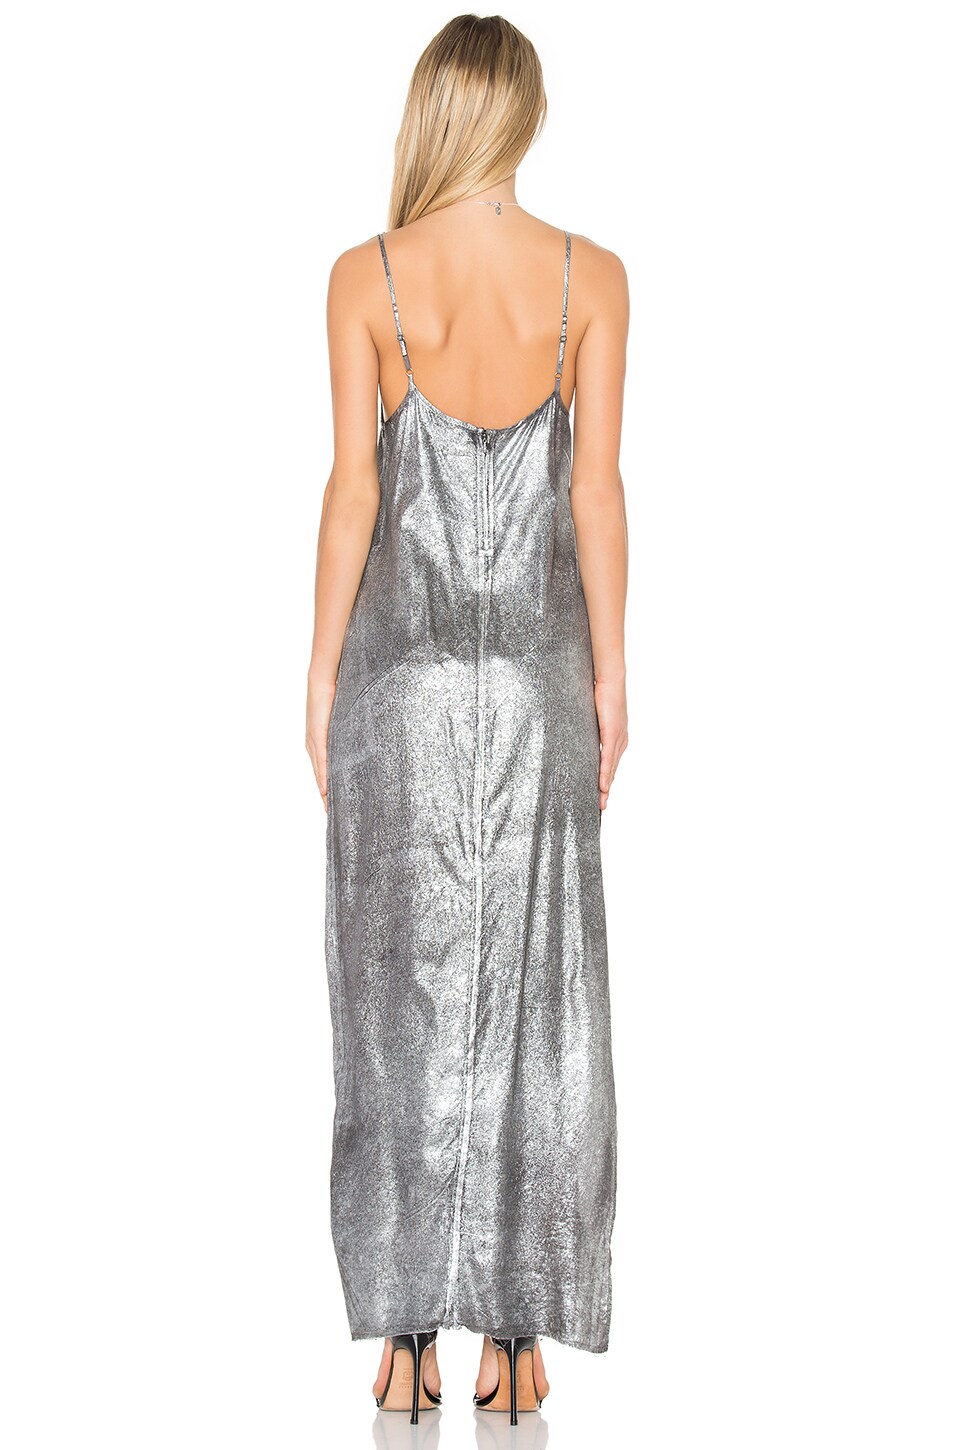 3 Stores In Stock: RTA Marlene Dress, Ice Diamond | ModeSens